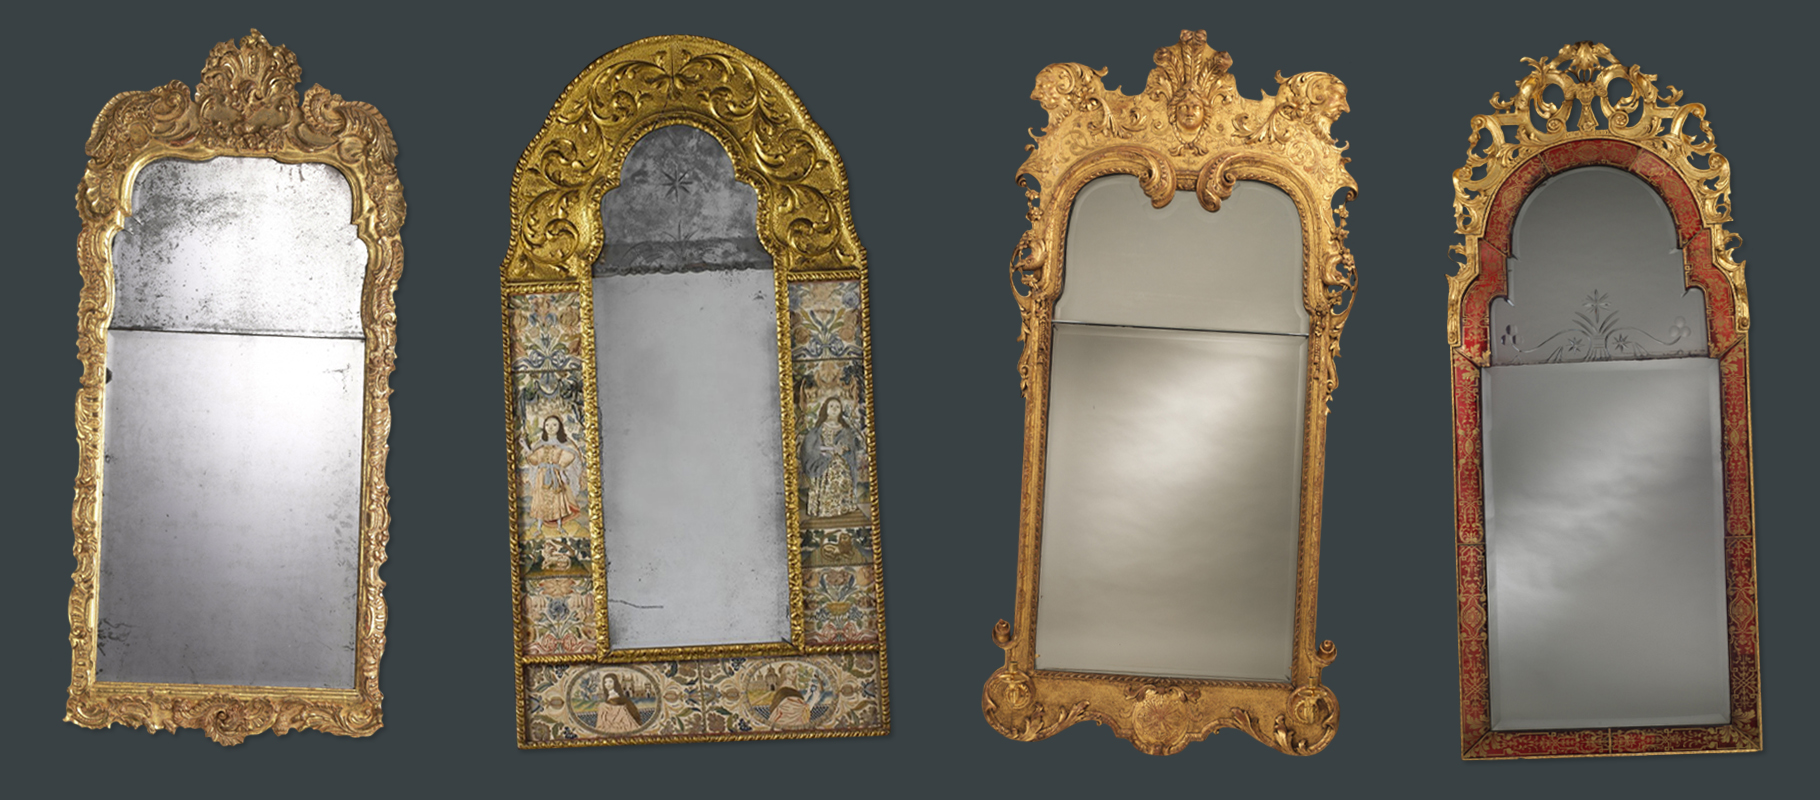 Mixed materials 18th century mirrors